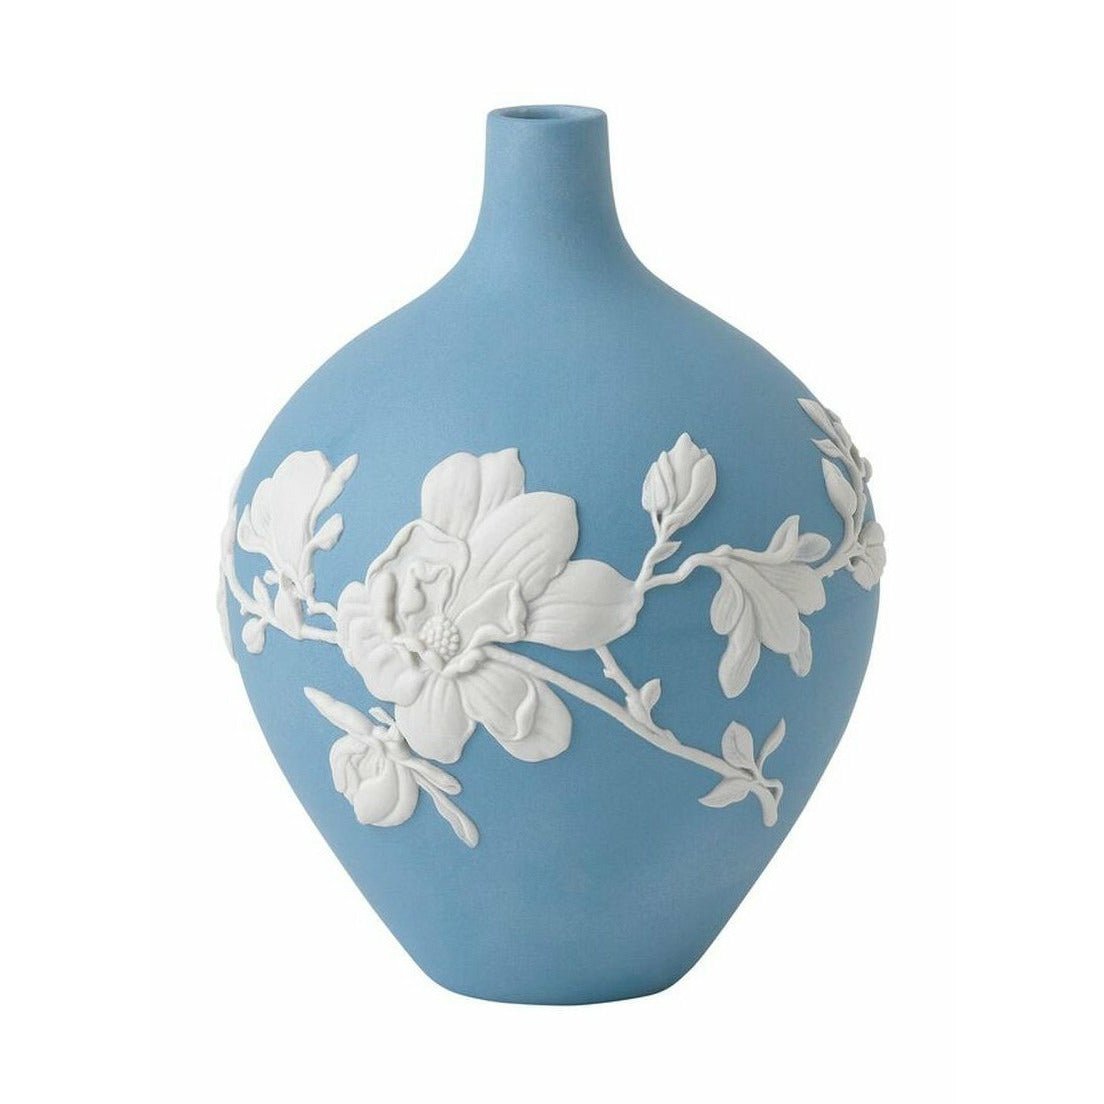 Wedgwood Magnolia Blossom Bud Vase, H: 14 Cm